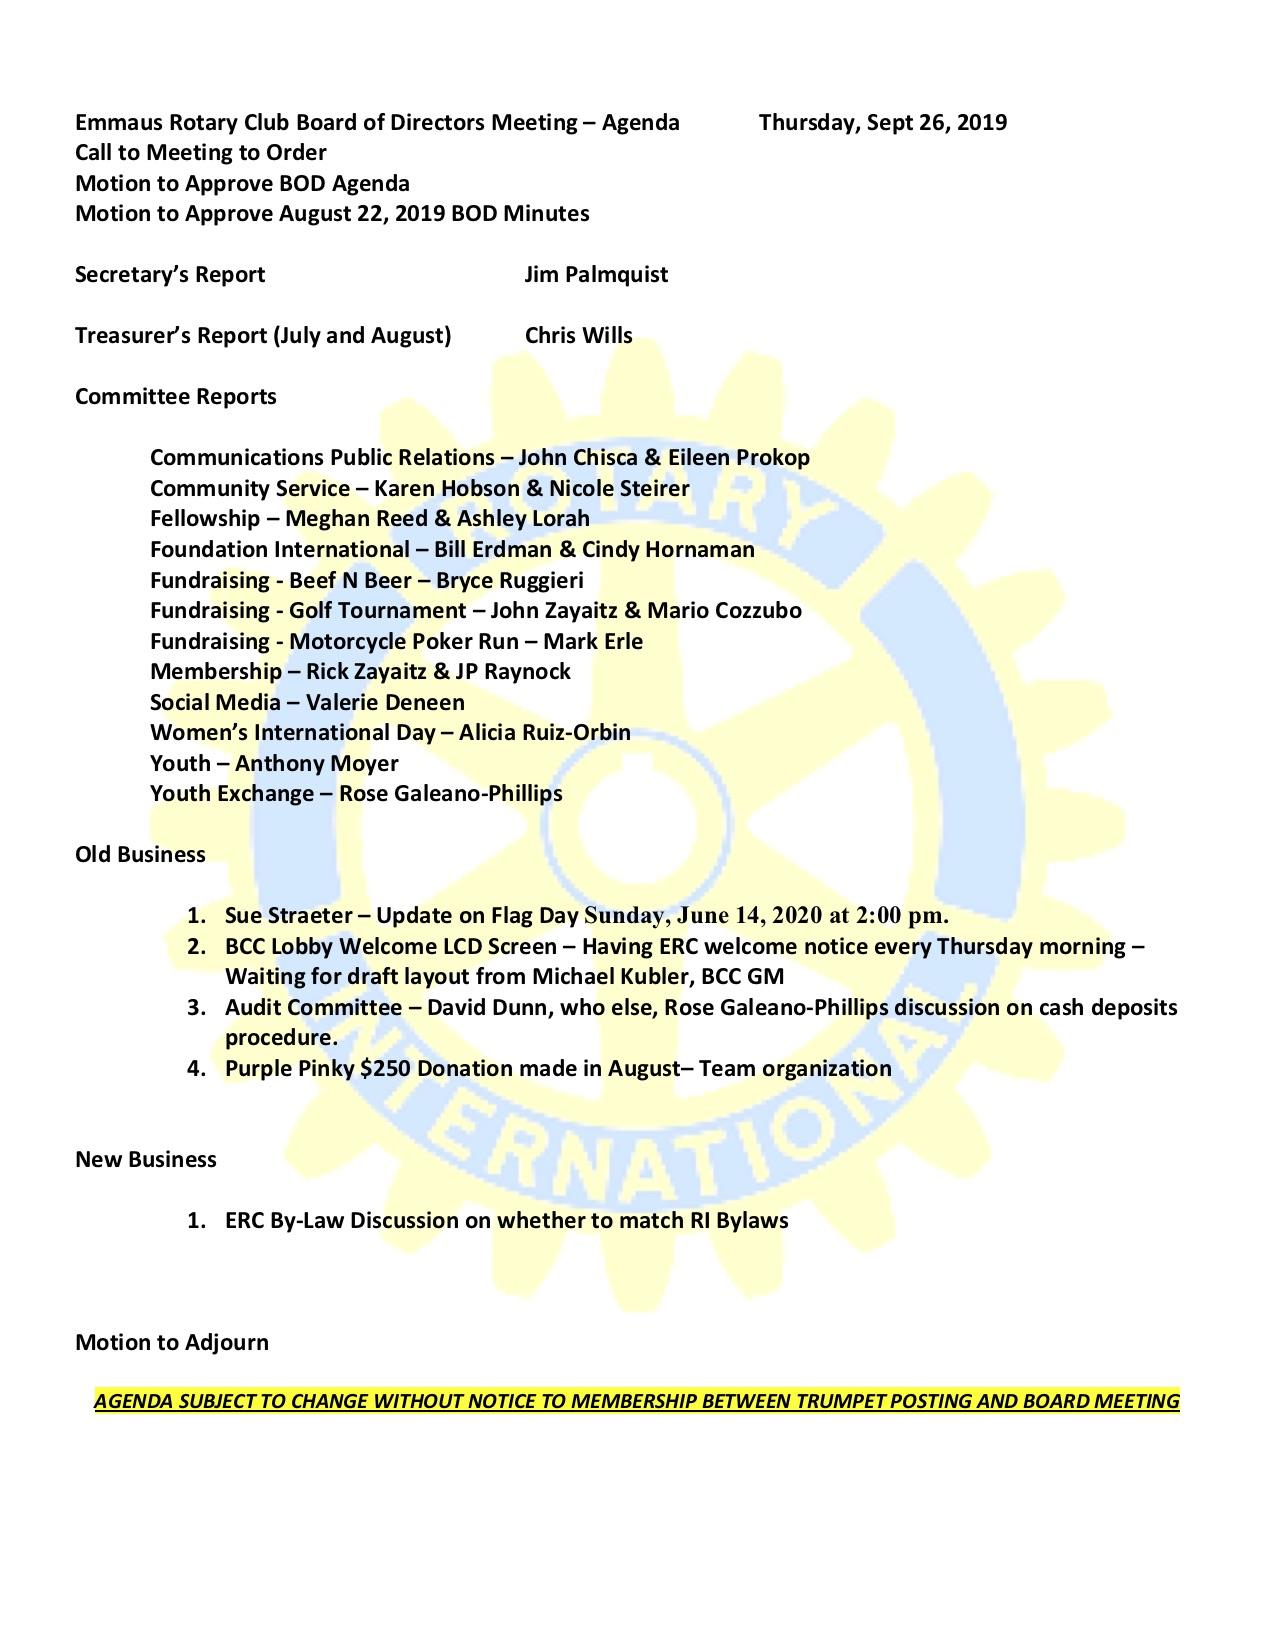 92619 Board Meeting Agenda Rotary Club Of Emmaus inside dimensions 1275 X 1650